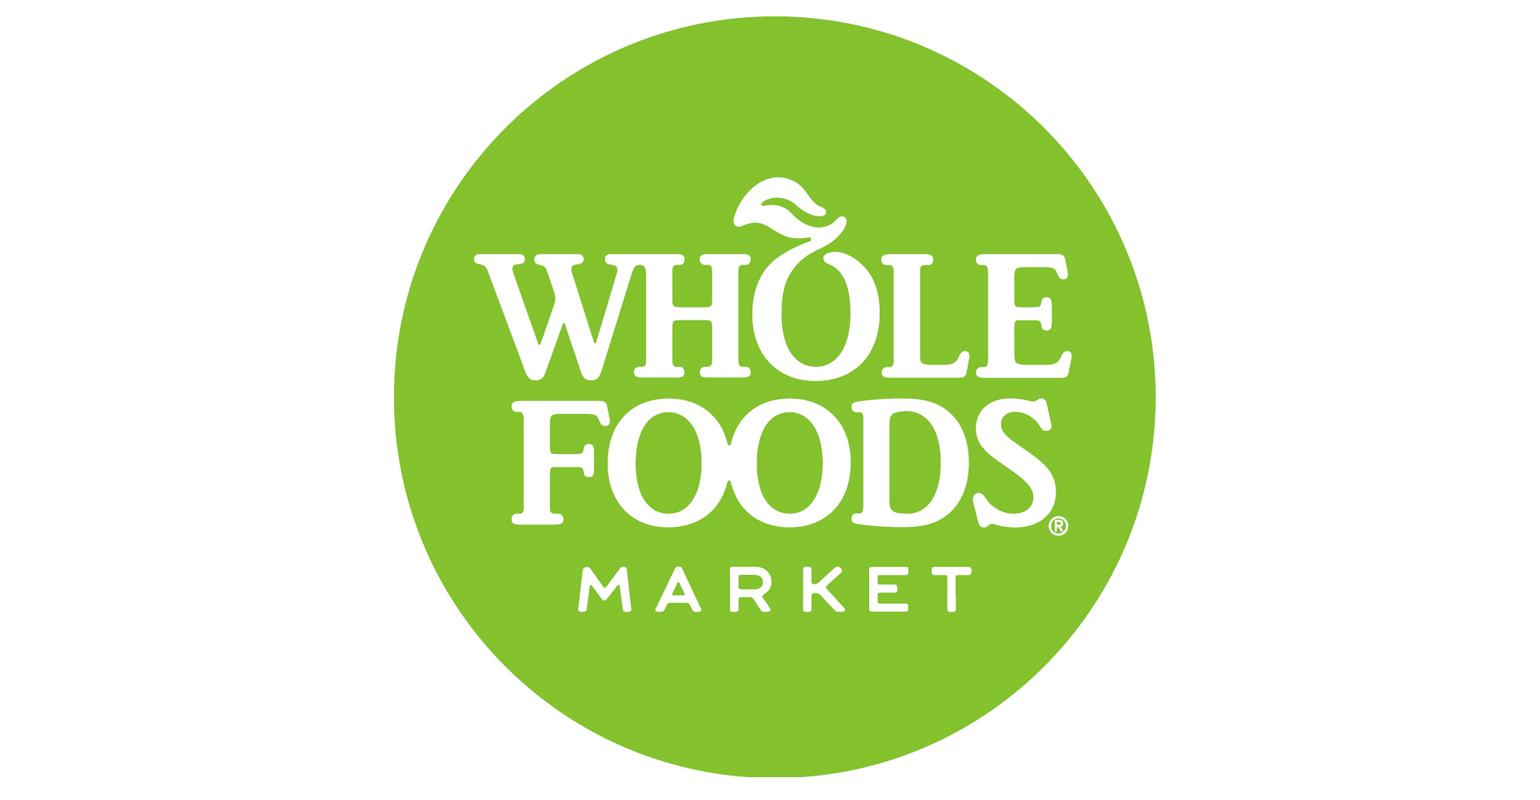 https://www.supermarketnews.com/sites/supermarketnews.com/files/styles/article_featured_retina/public/Whole_Foods_Market_logo-promo.jpg?itok=v-jo35J5